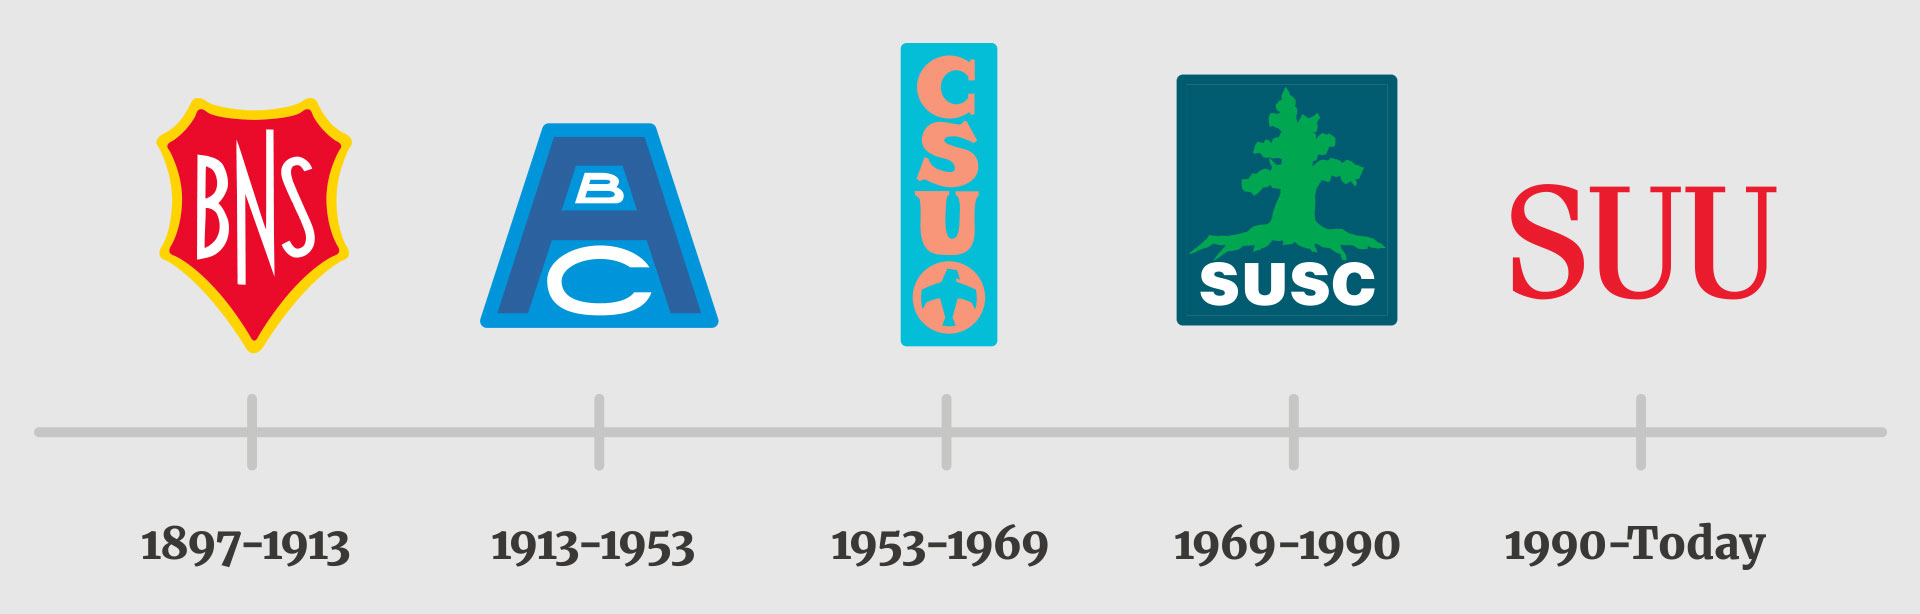 timeline logos for SUU's 125th Celebration